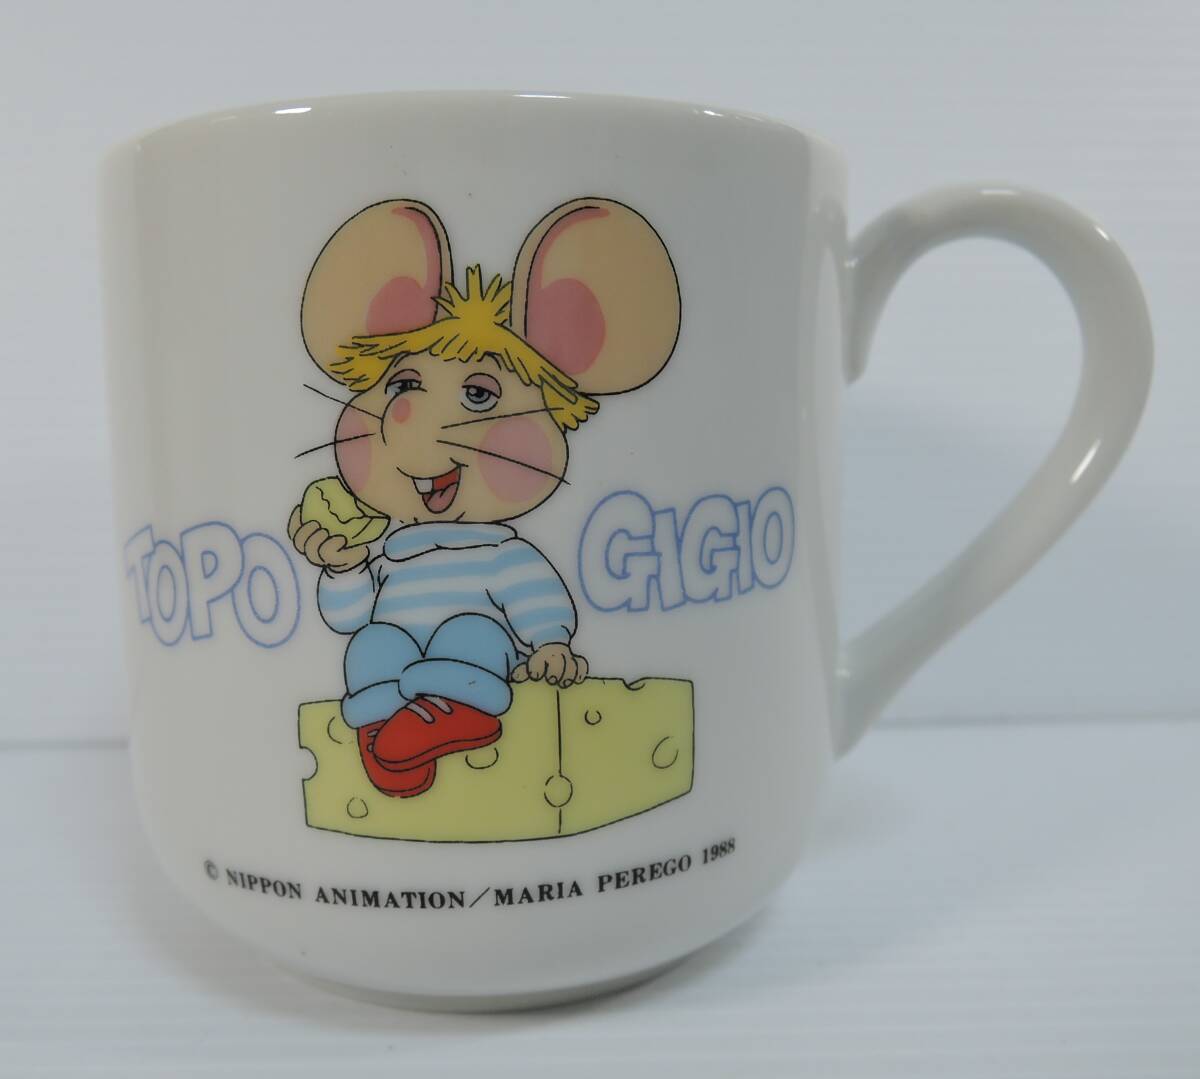 *01S Showa Retro # Topo Gigio mug ceramics made #MARIA PEREGO 1988/ Japan animation /TOPO GIGIO